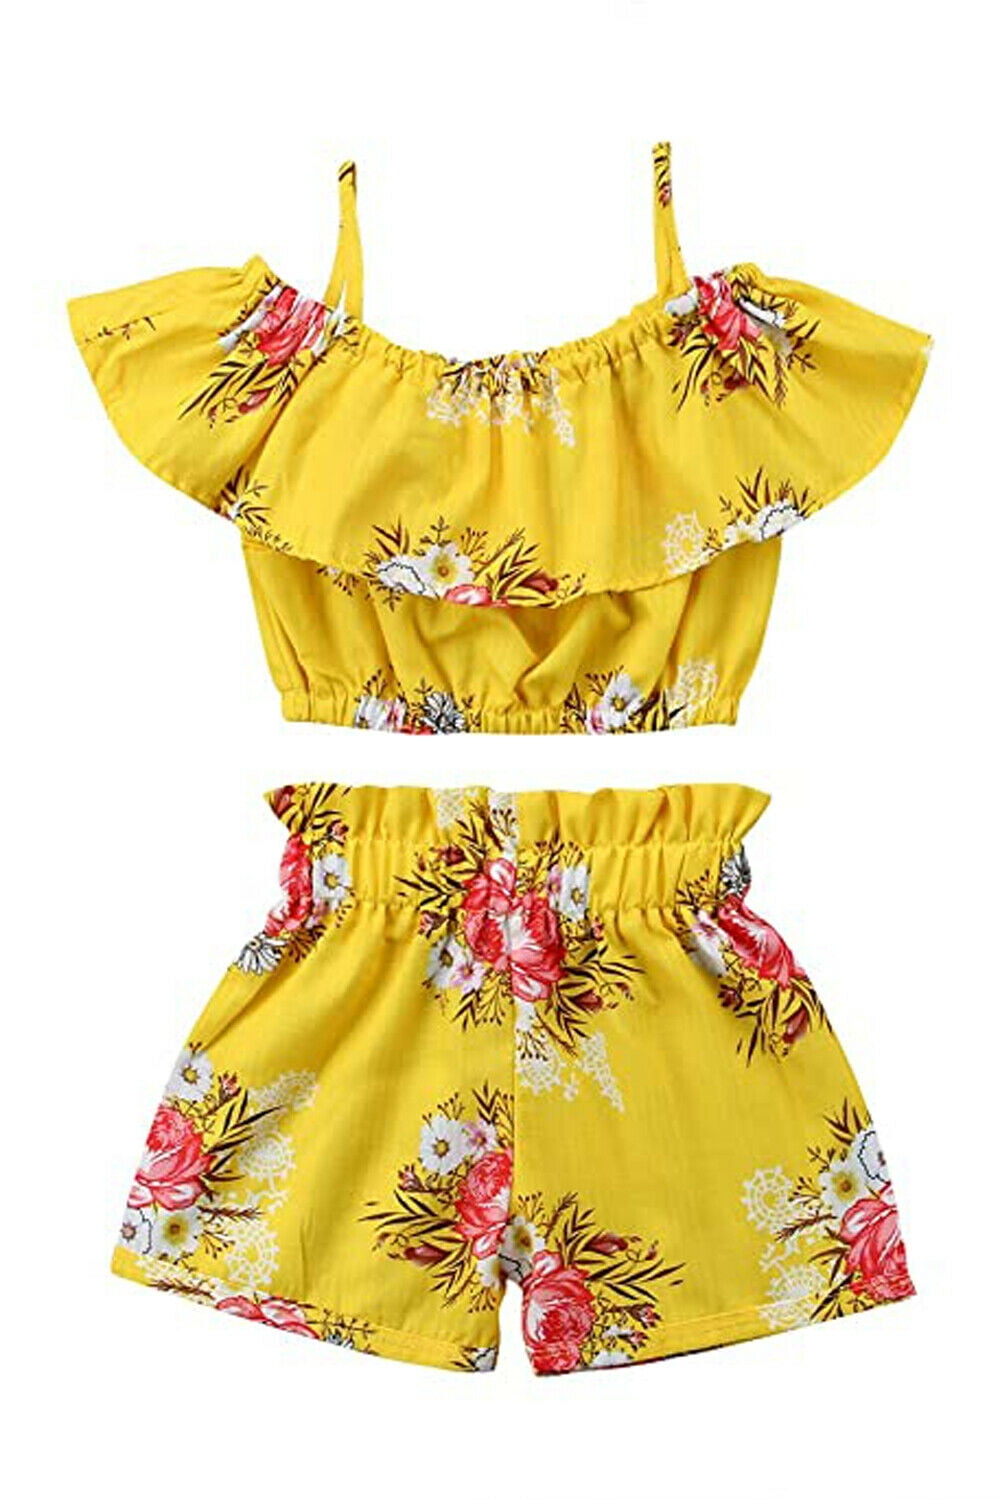 0-4Years,Zimuuy Newborn Infant Baby Girls Summer Off Shoulder Print Tops Shirt+Denim Shorts Pants Outfits Sets